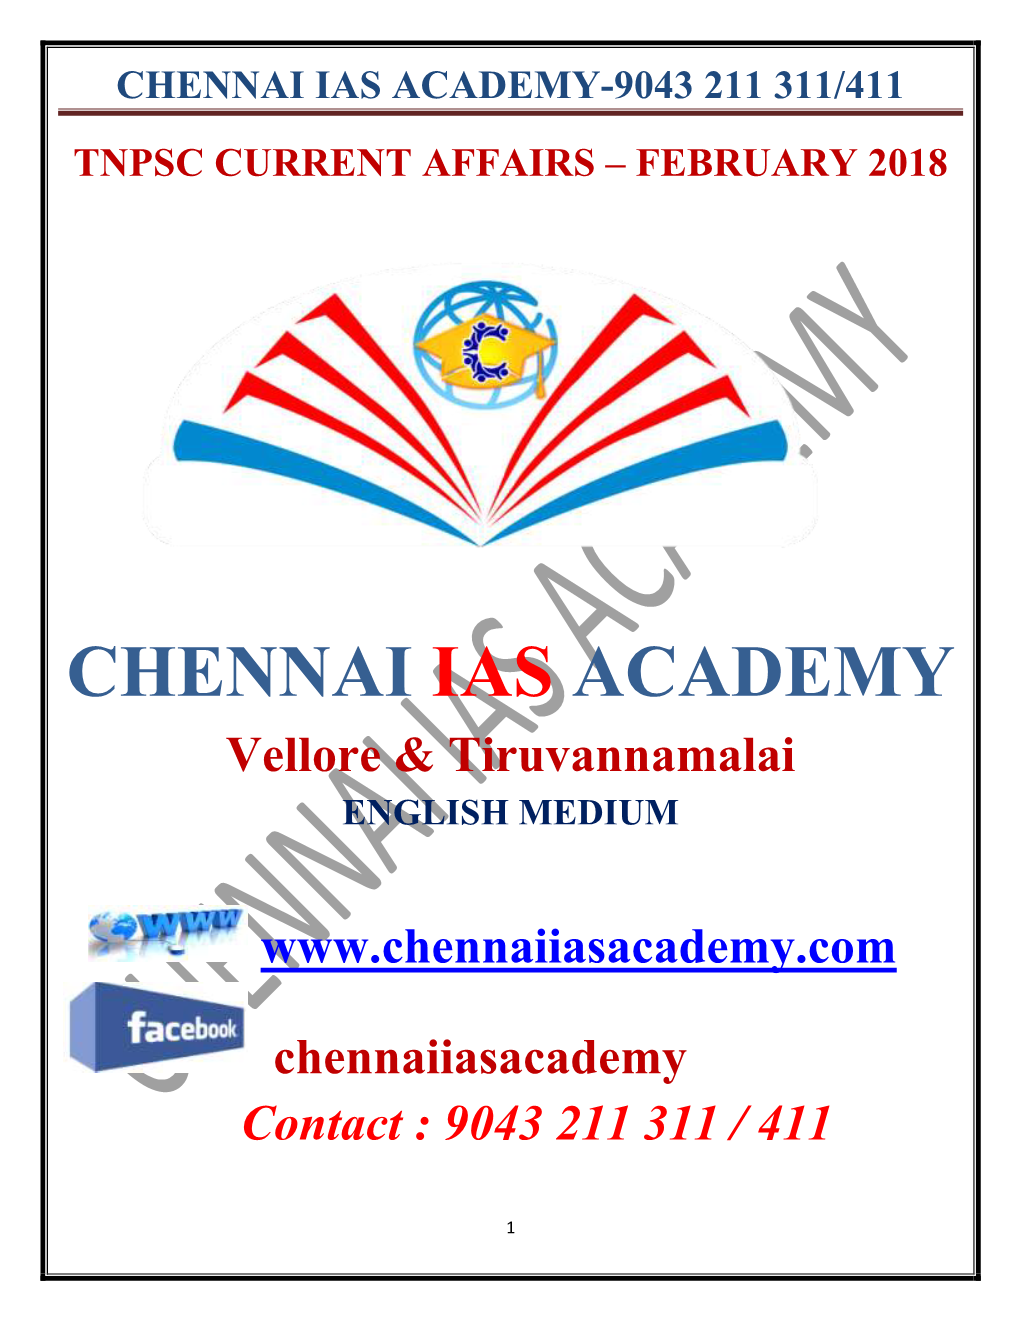 Chennai Ias Academy-9043 211 311/411